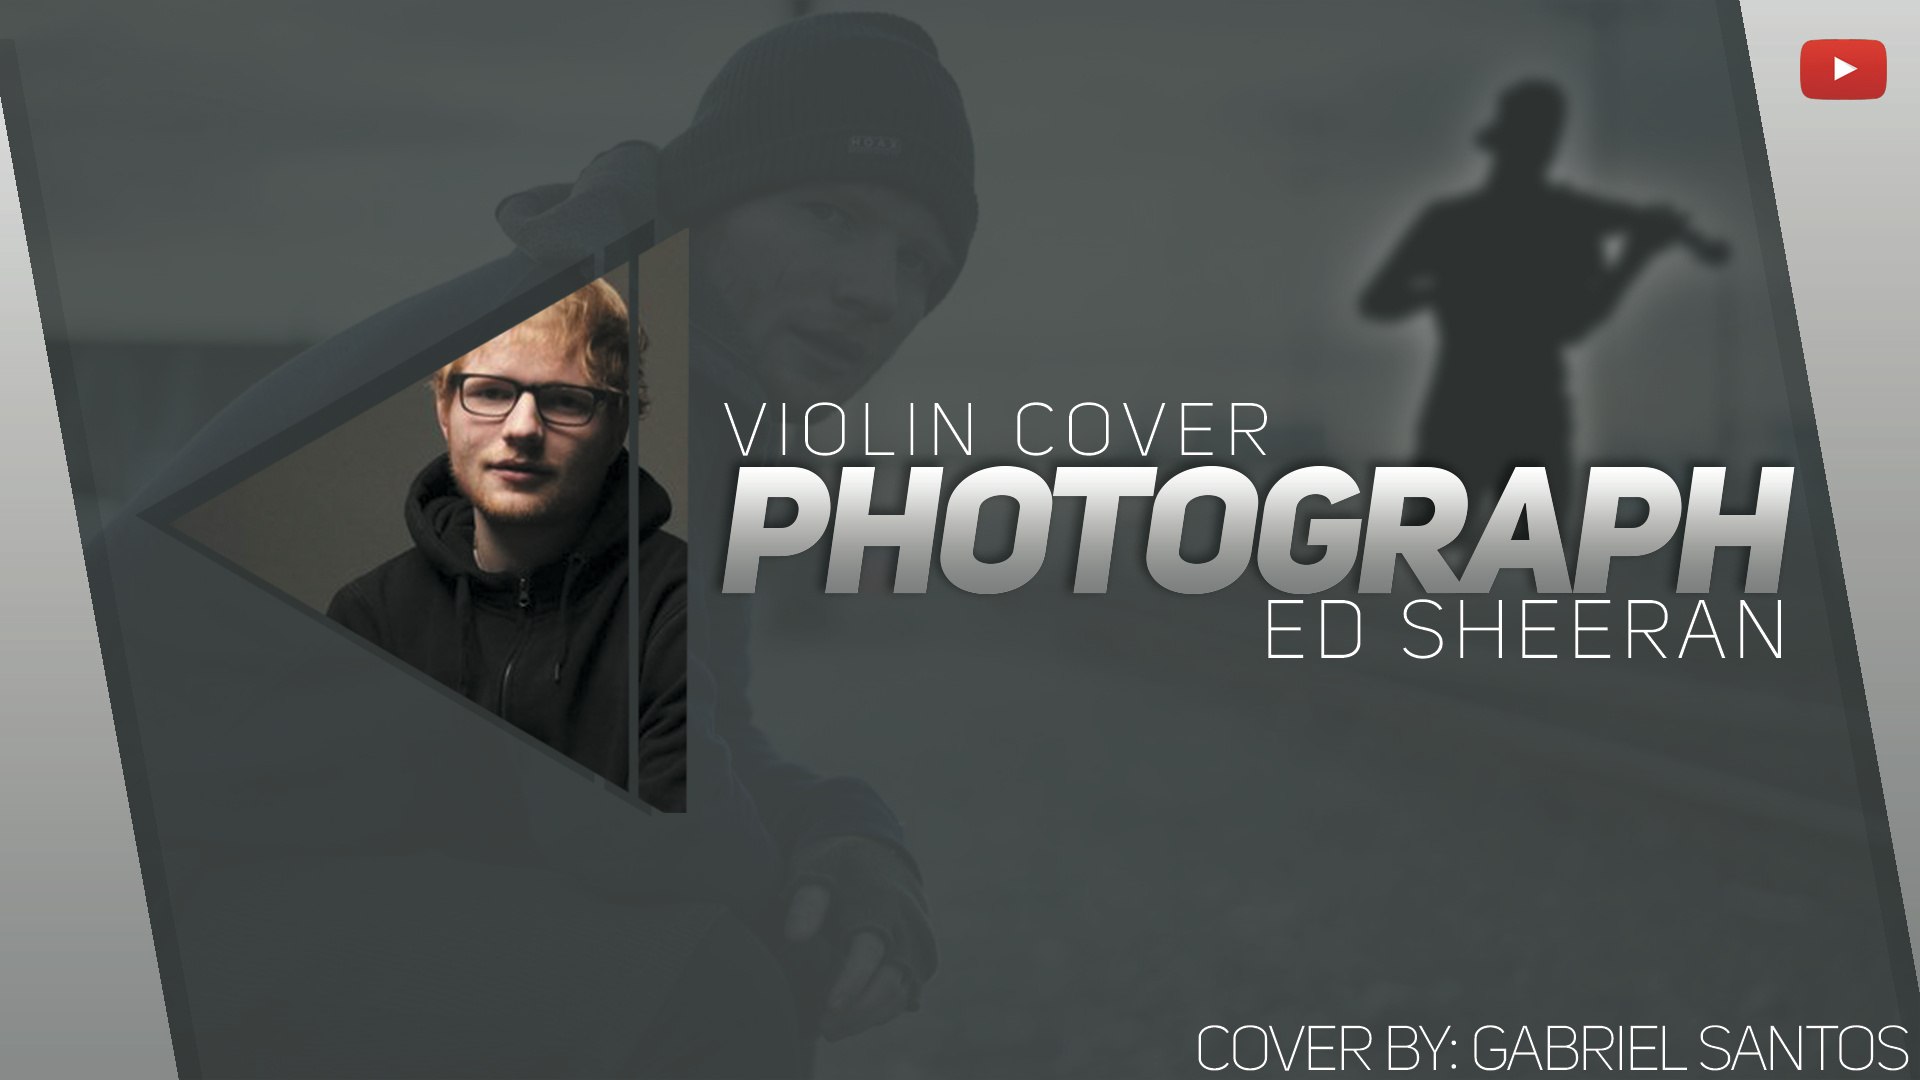 Photograph - Ed Sheeran [Violin Cover]